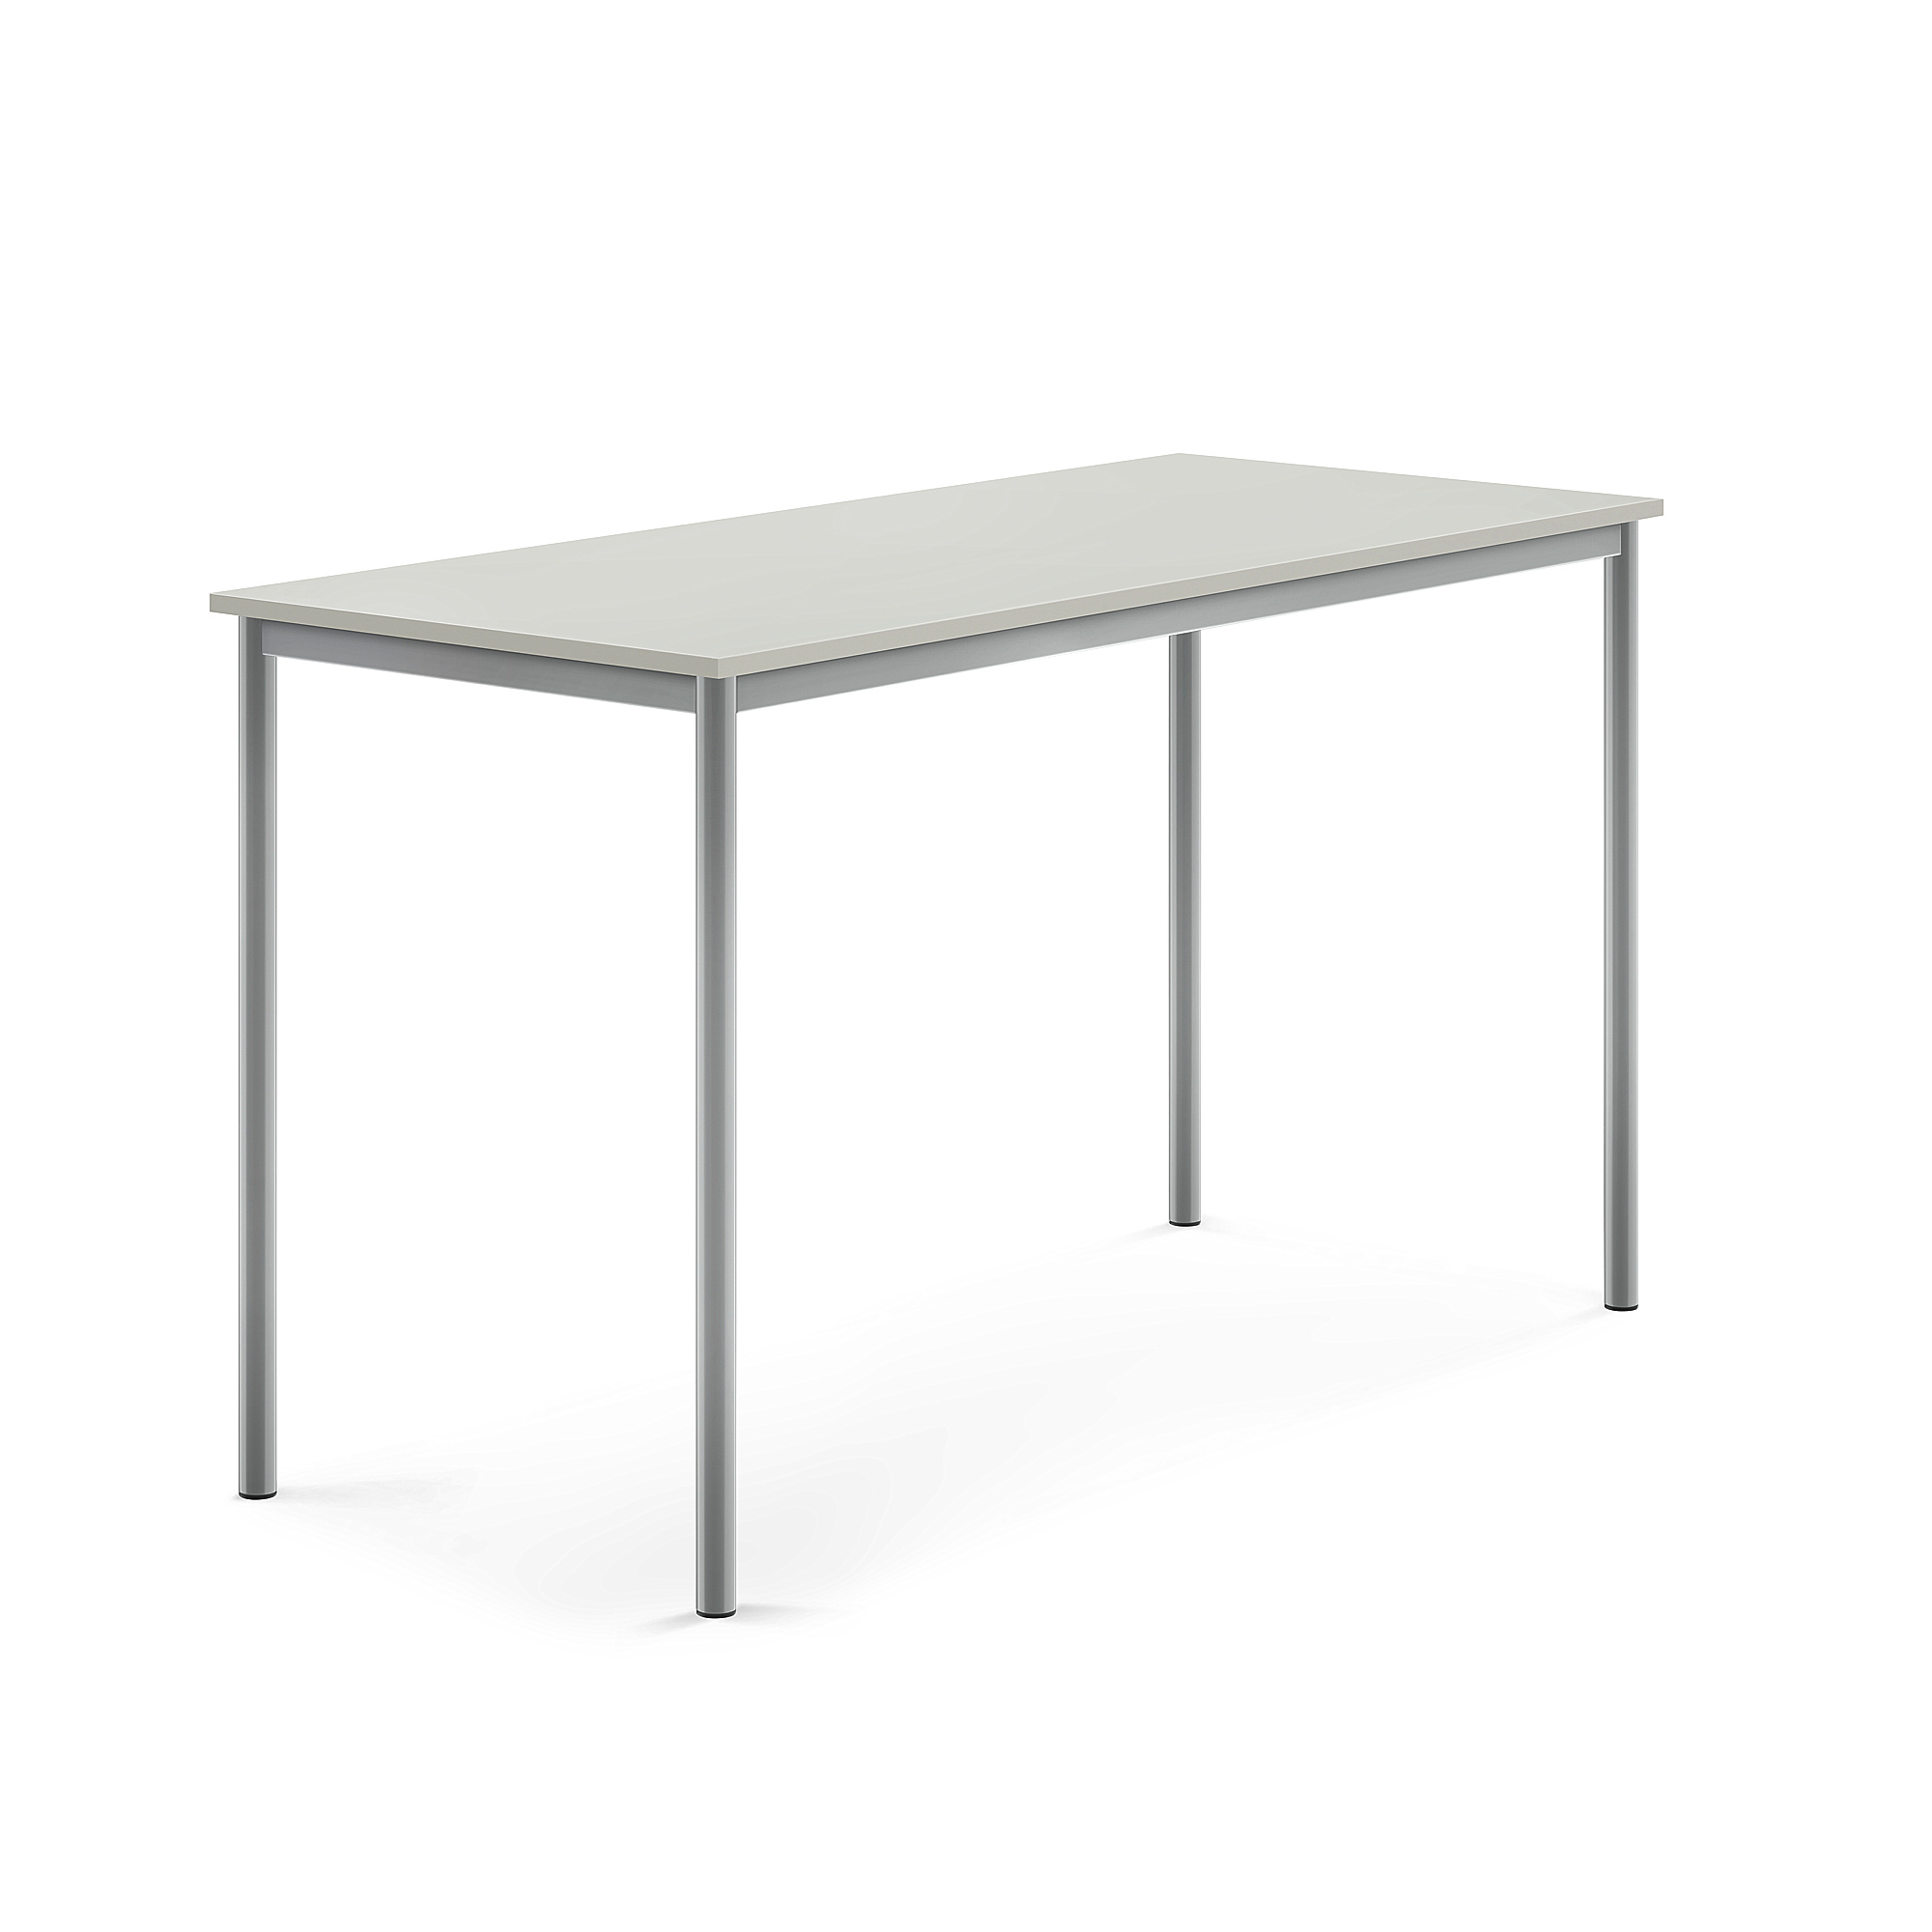 Stůl BORÅS, 1600x700x900 mm, stříbrné nohy, HPL deska, šedá